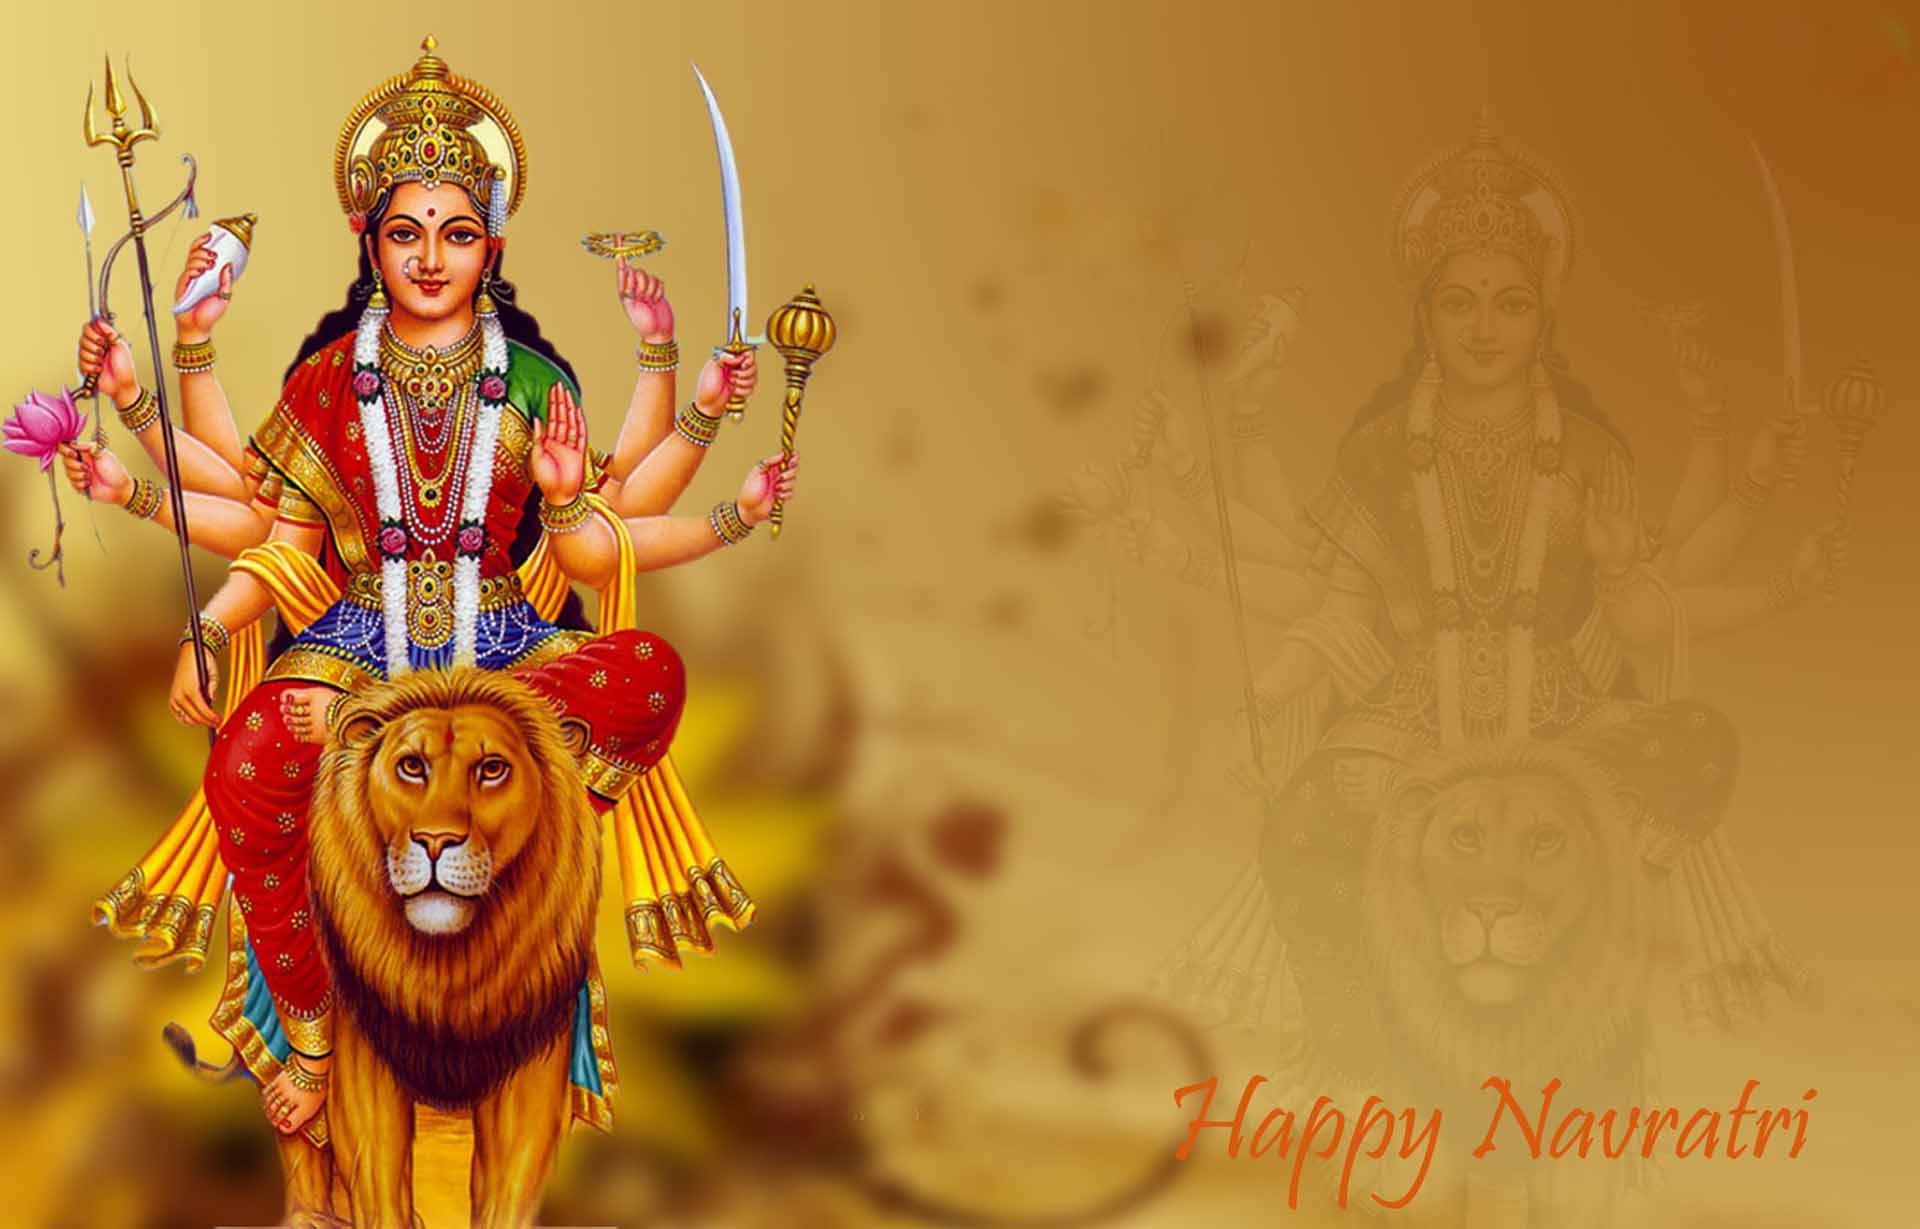 Happy Navratri 2022 Wallpaper Images HD download